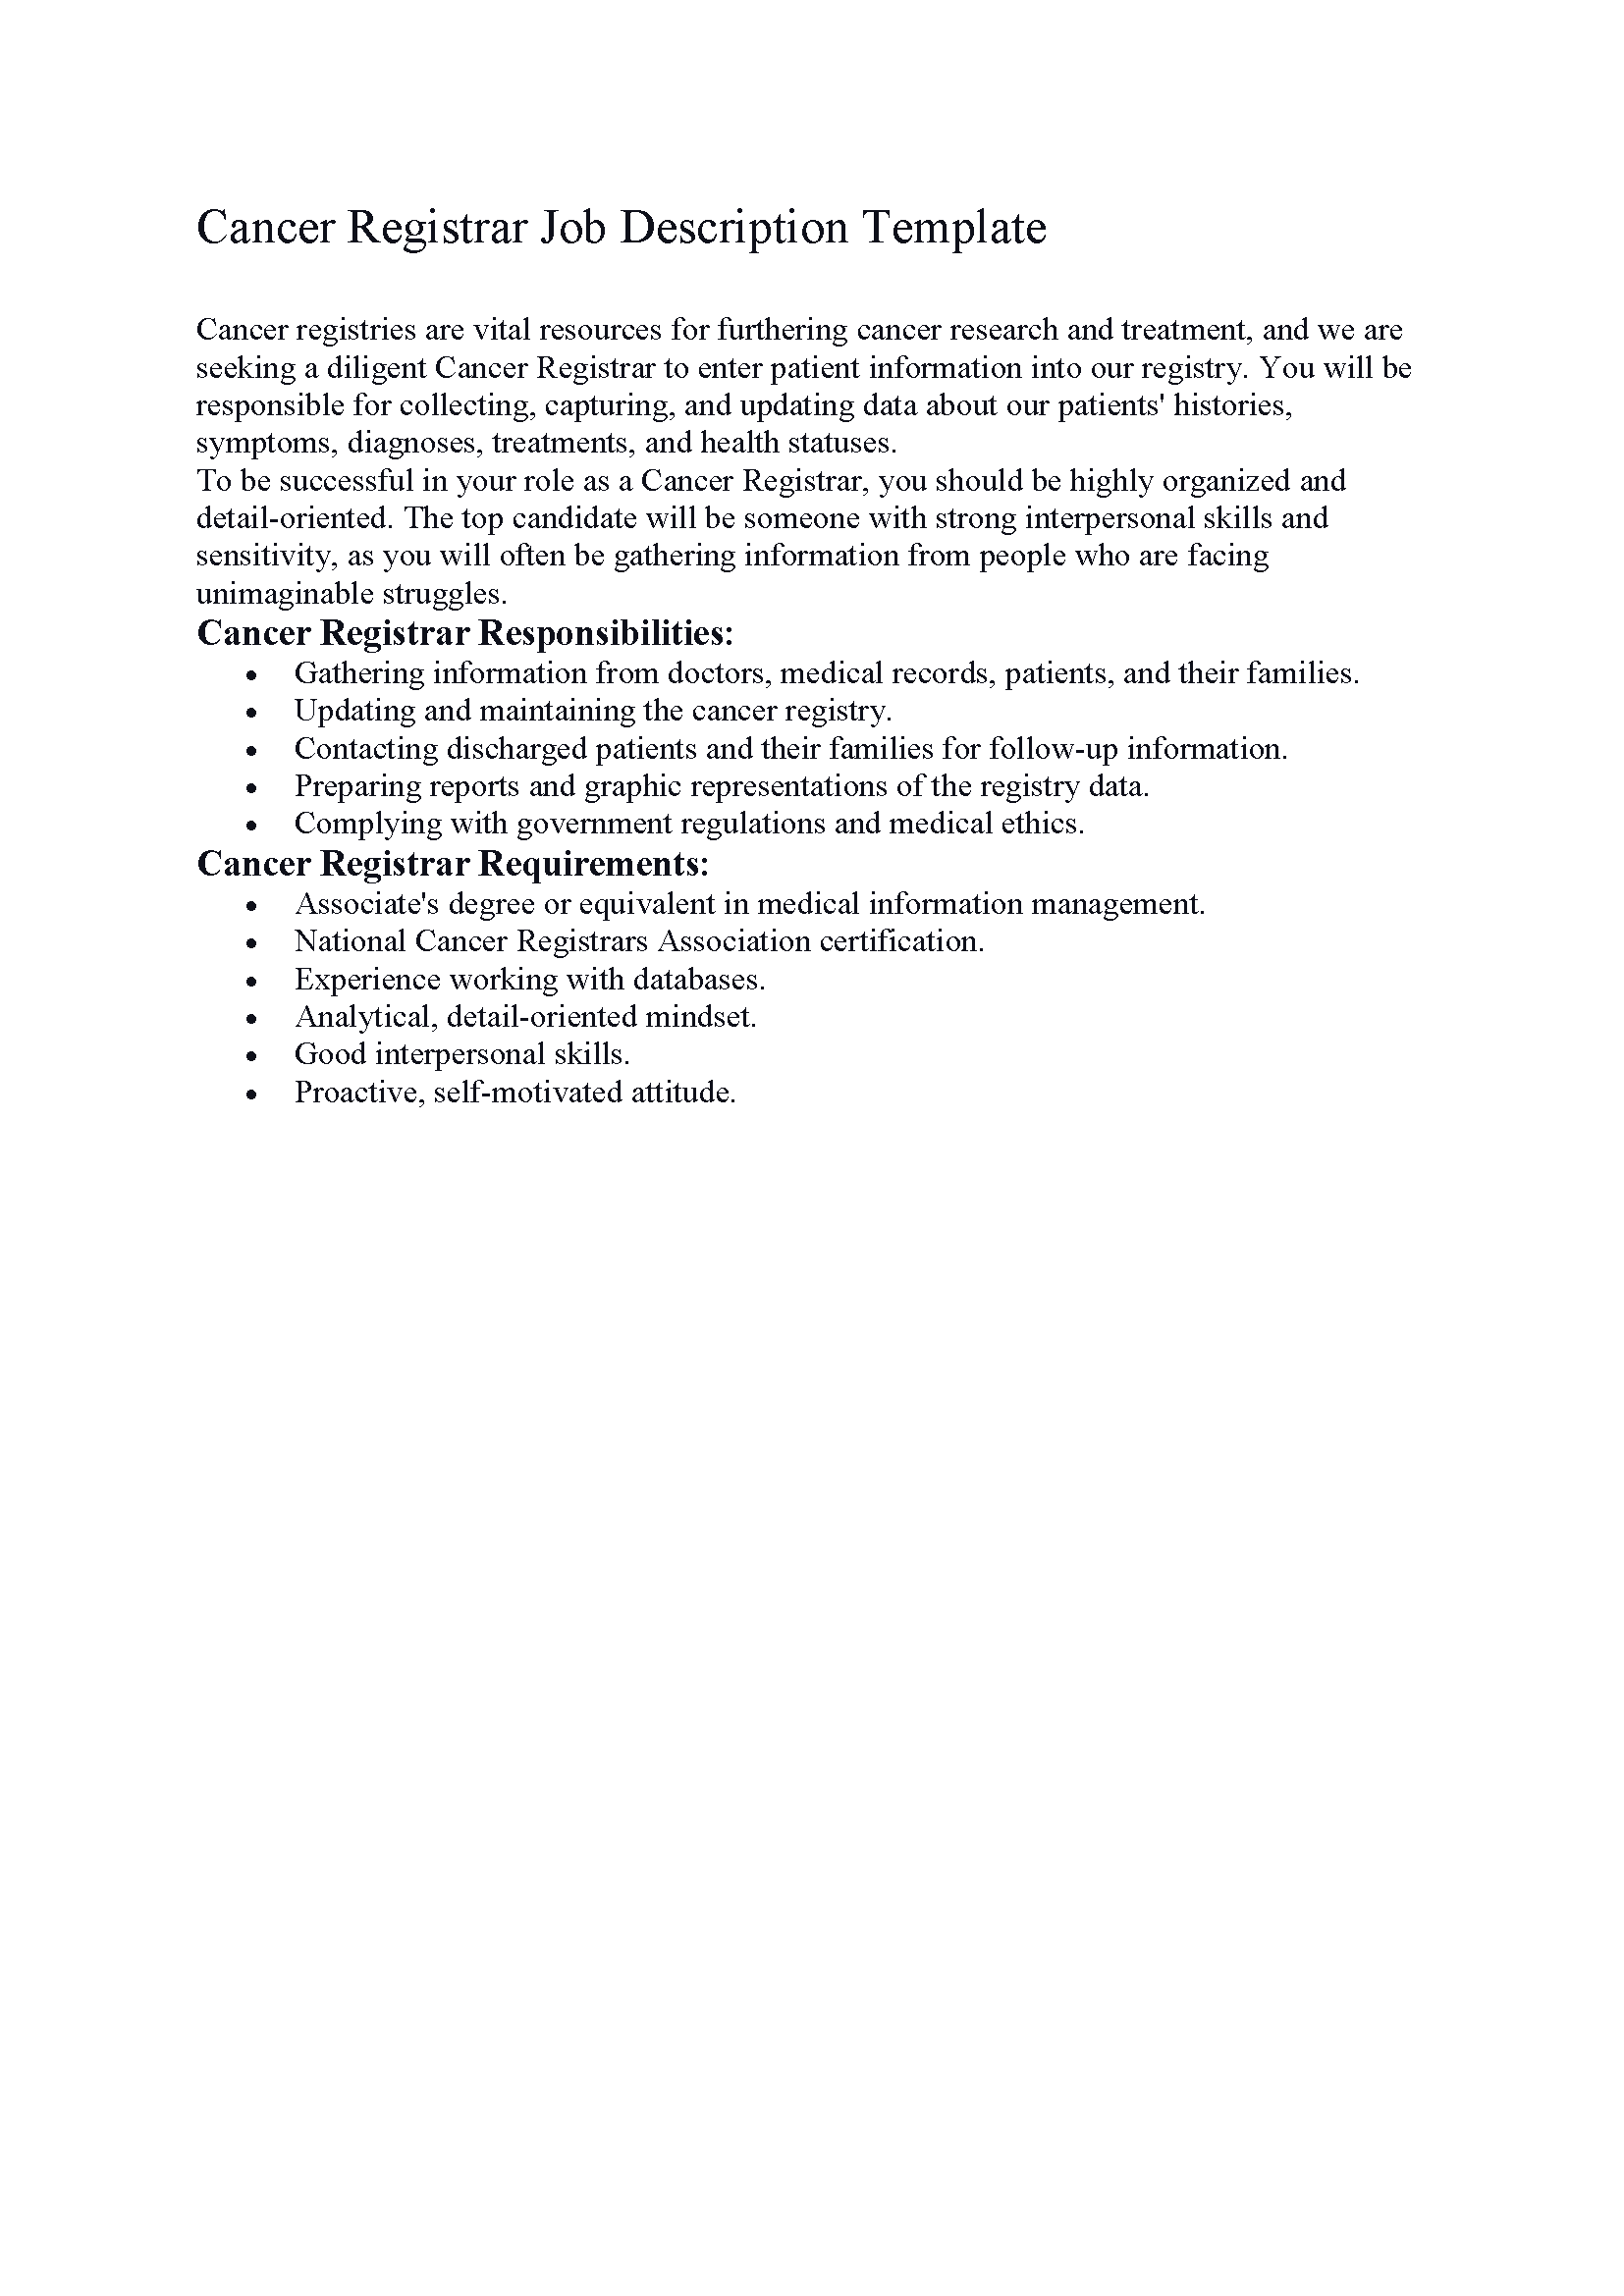 Cancer Registrar Job Description Template